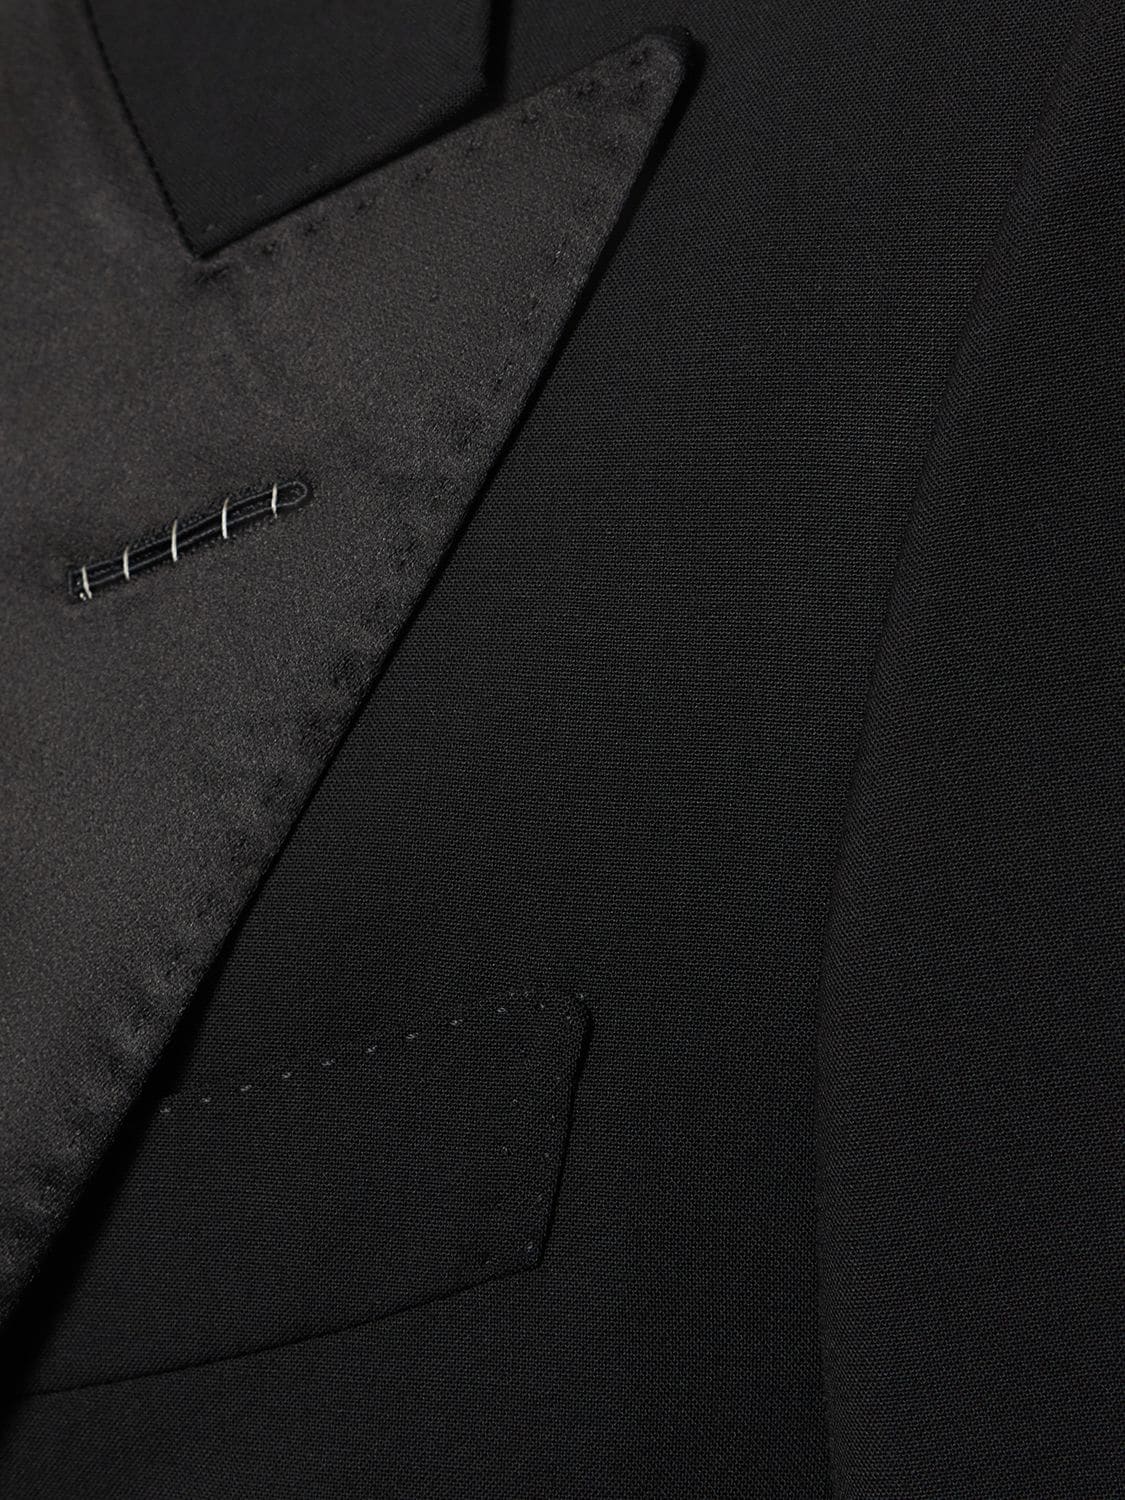 Tom Ford Bistretch Plain Weave Shelton Evening Suit In Black | ModeSens